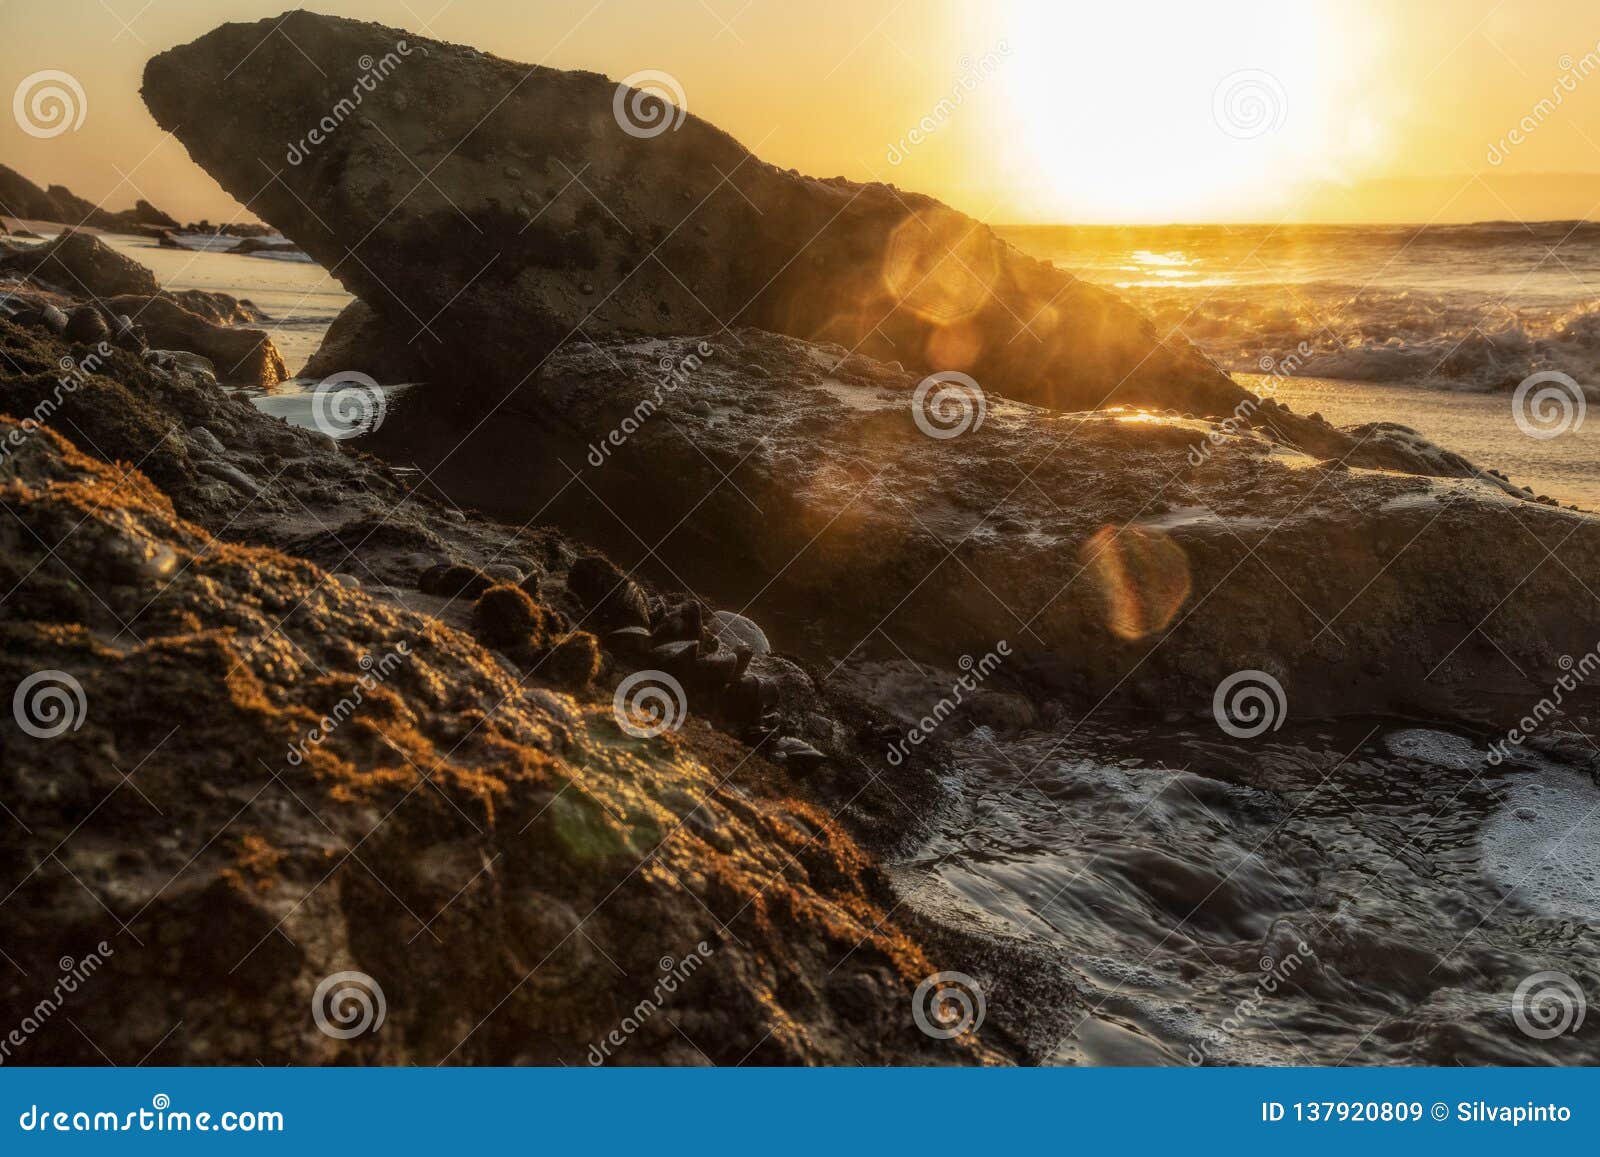 rocks along the coast with bivalves and marine life. namibe. africa. angola